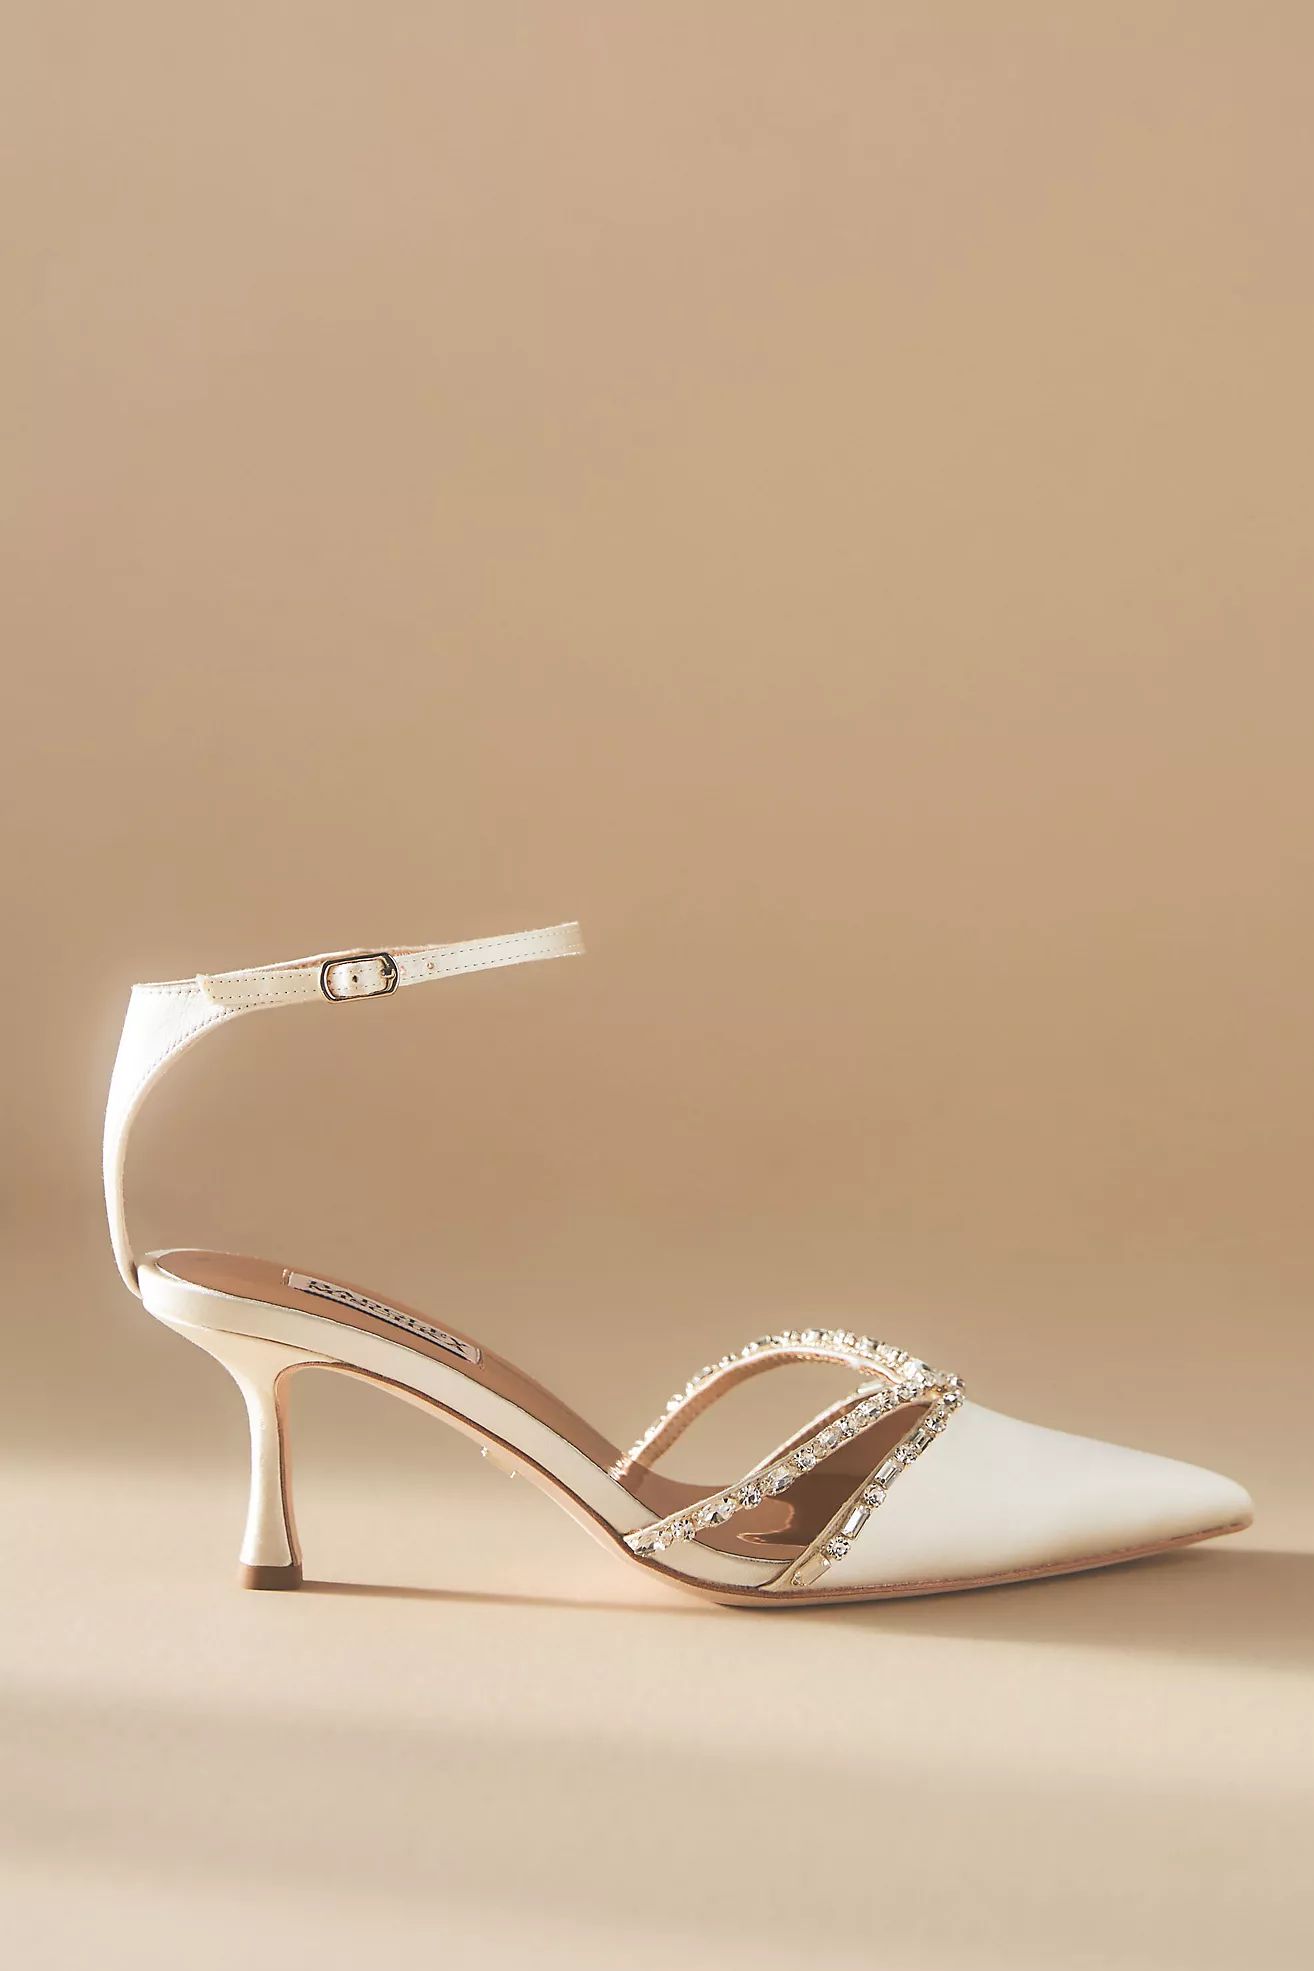 Badgley Mischka Zendaya Gemstone-Embellished Kitten Heels | Anthropologie (US)